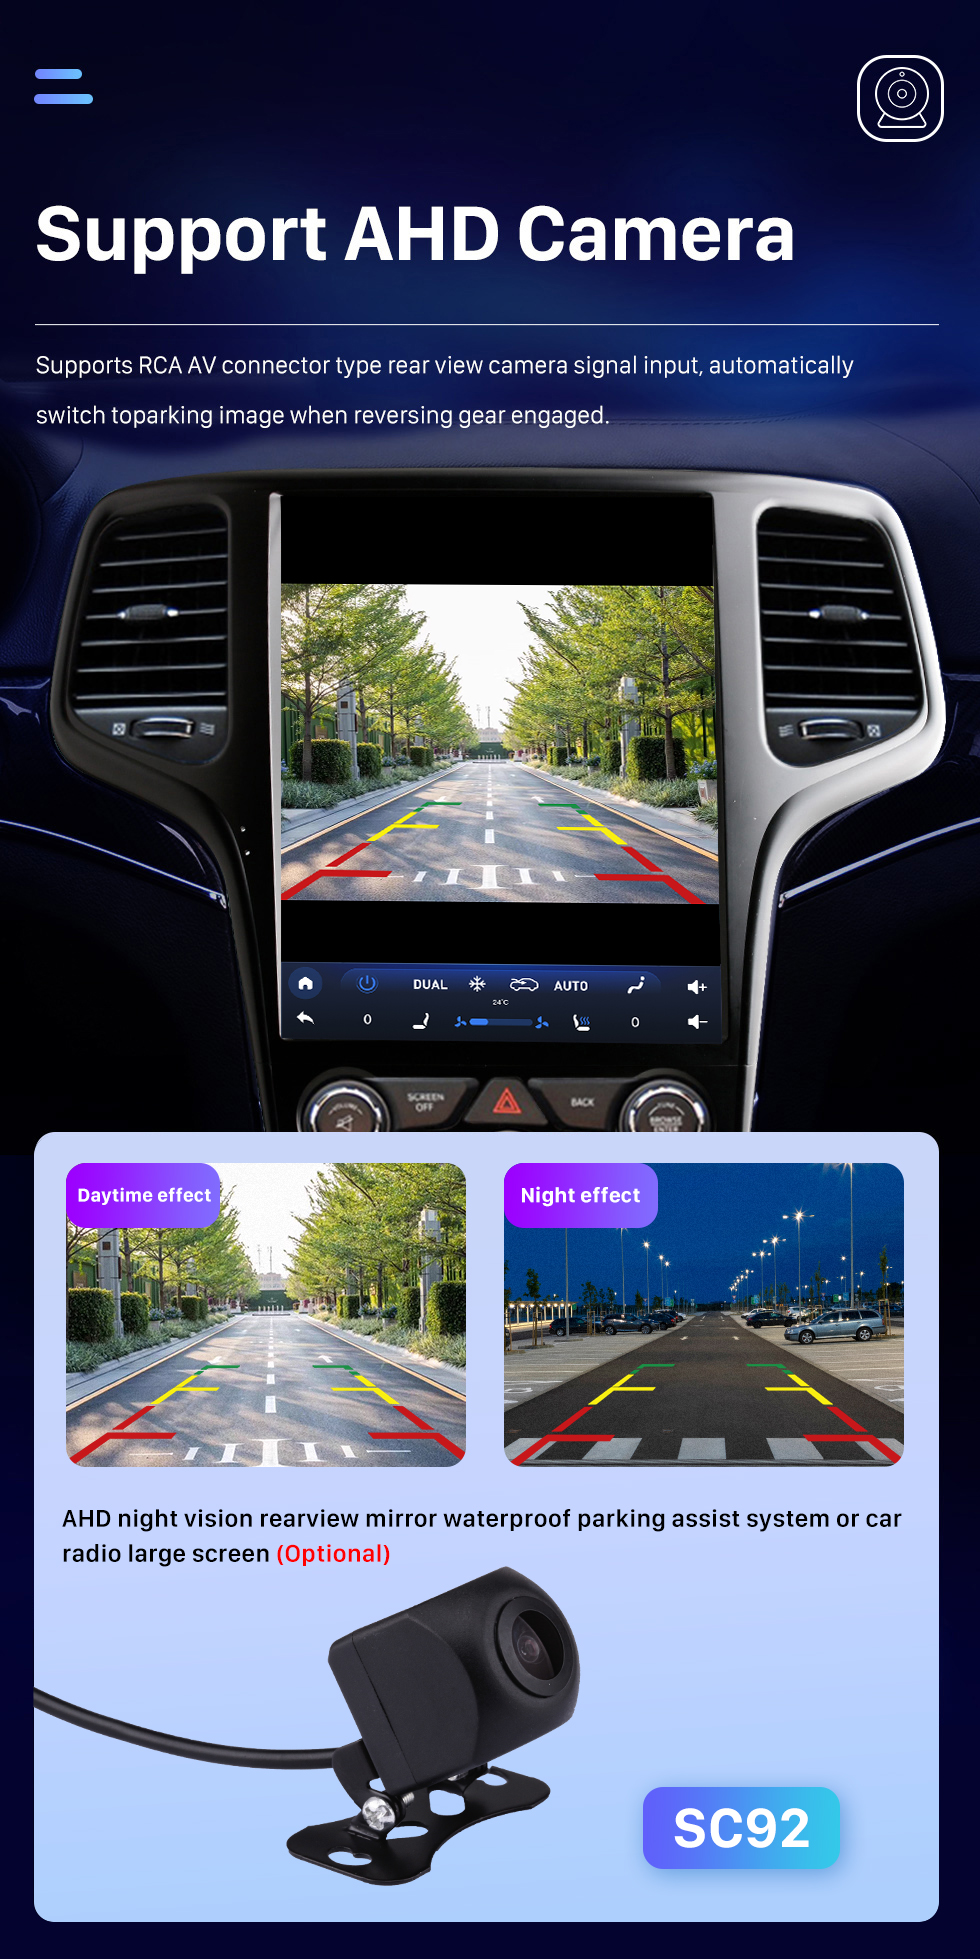 Seicane OEM 12,1-дюймовый Android 10.0 для 2014 2015 Jeep Grand Cherokee SRT Радио GPS-навигационная система HD Сенсорный экран Bluetooth Carplay